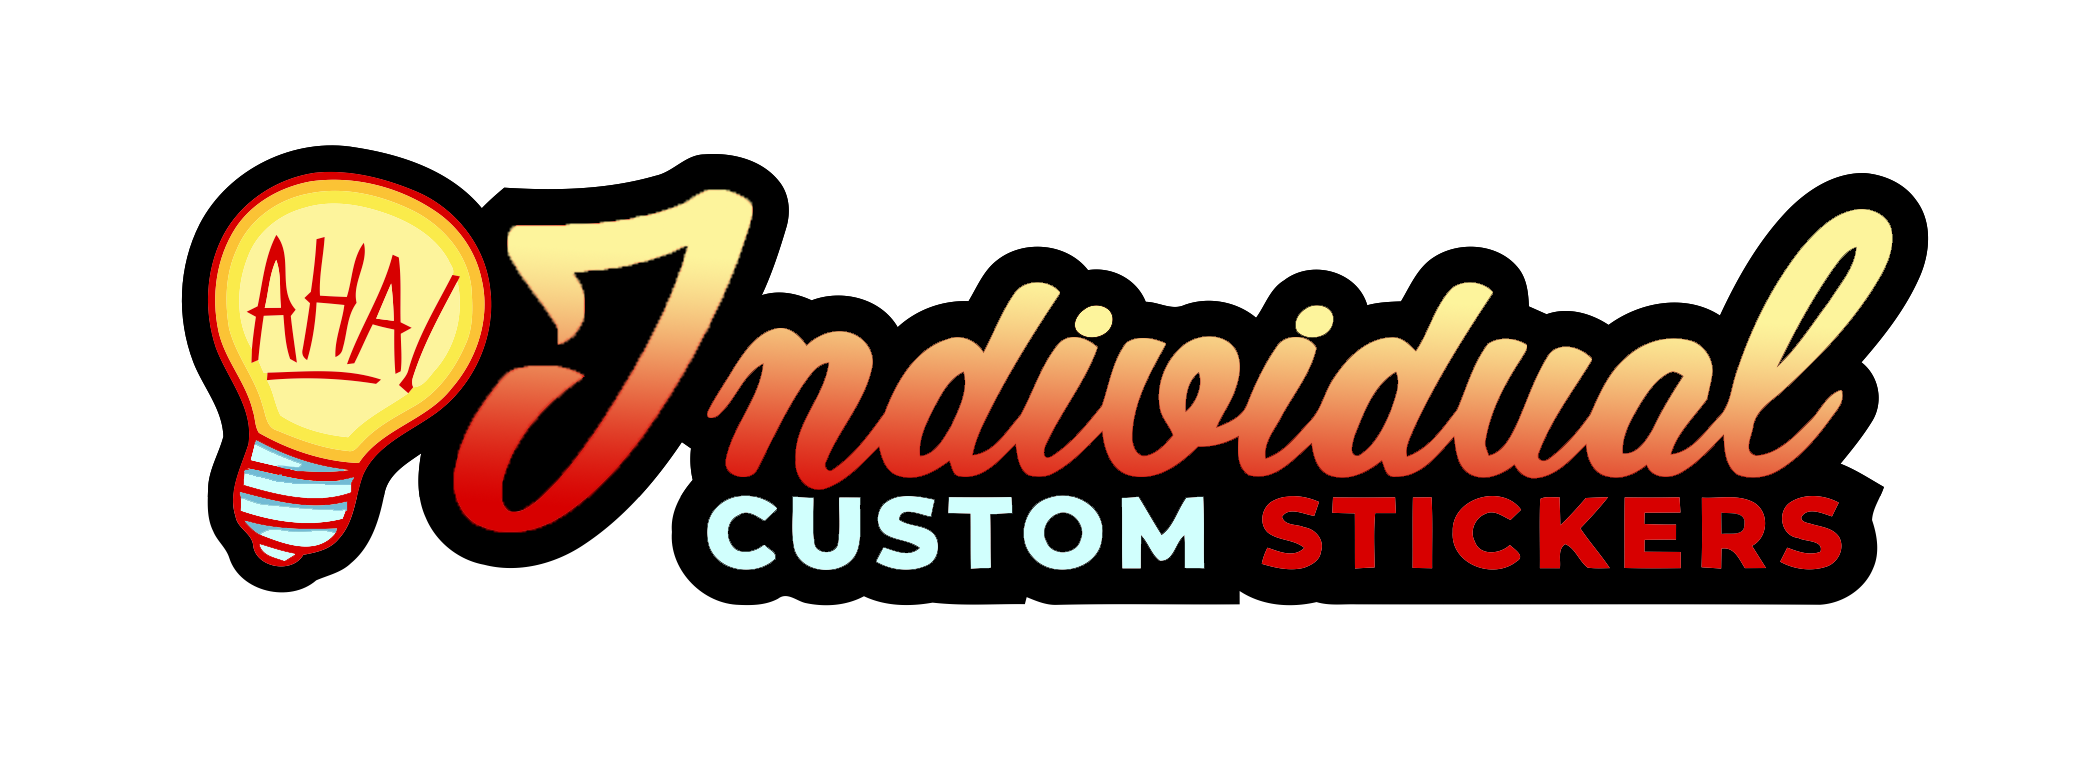 Individual Custom Stickers